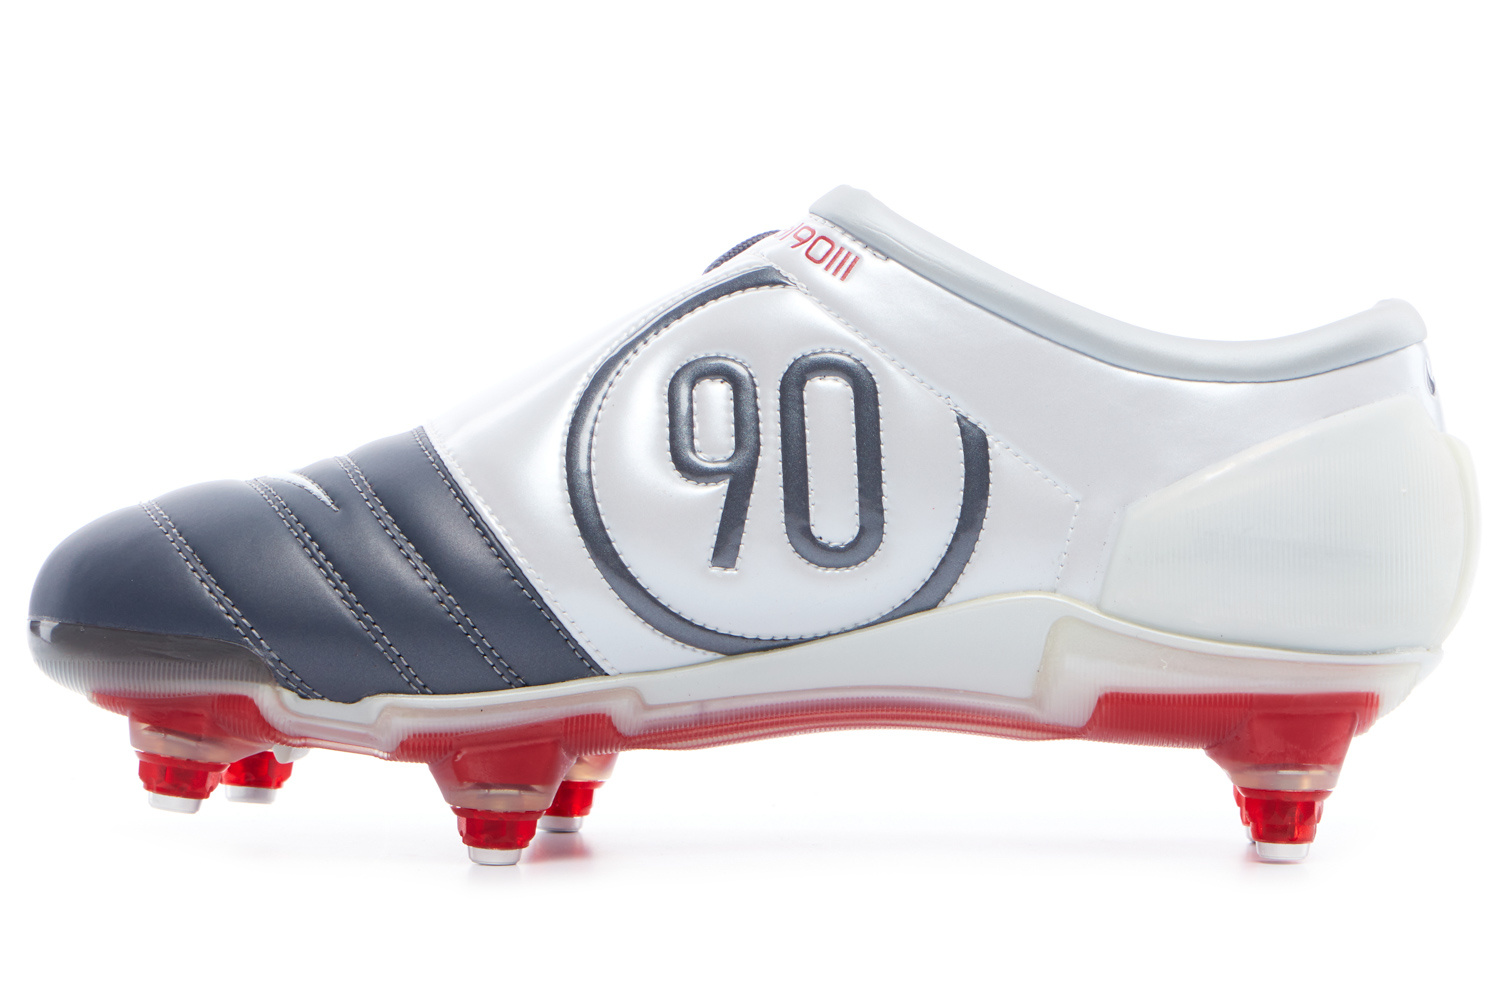 Nike Total 90 Zoom III Football Boots *In Box* SG